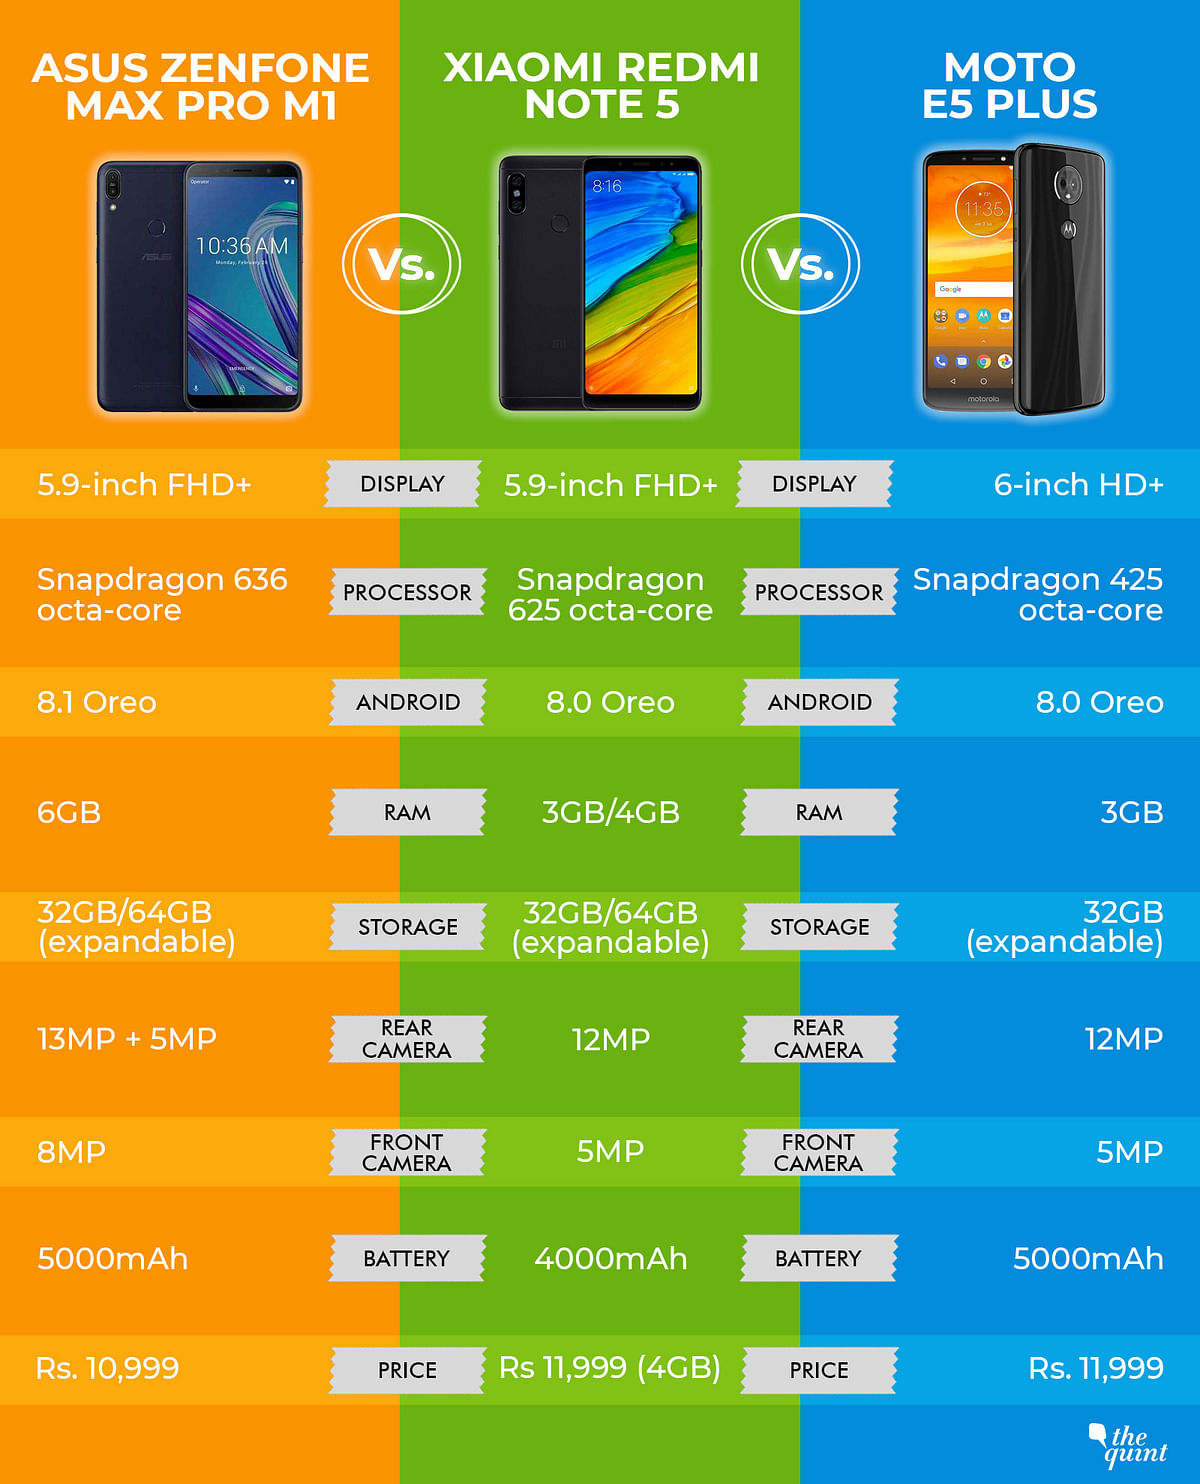 A quick spec-to-spec comparison between the Moto E5 Plus, Asus Zenfone Max Pro and the Redmi Note 5.